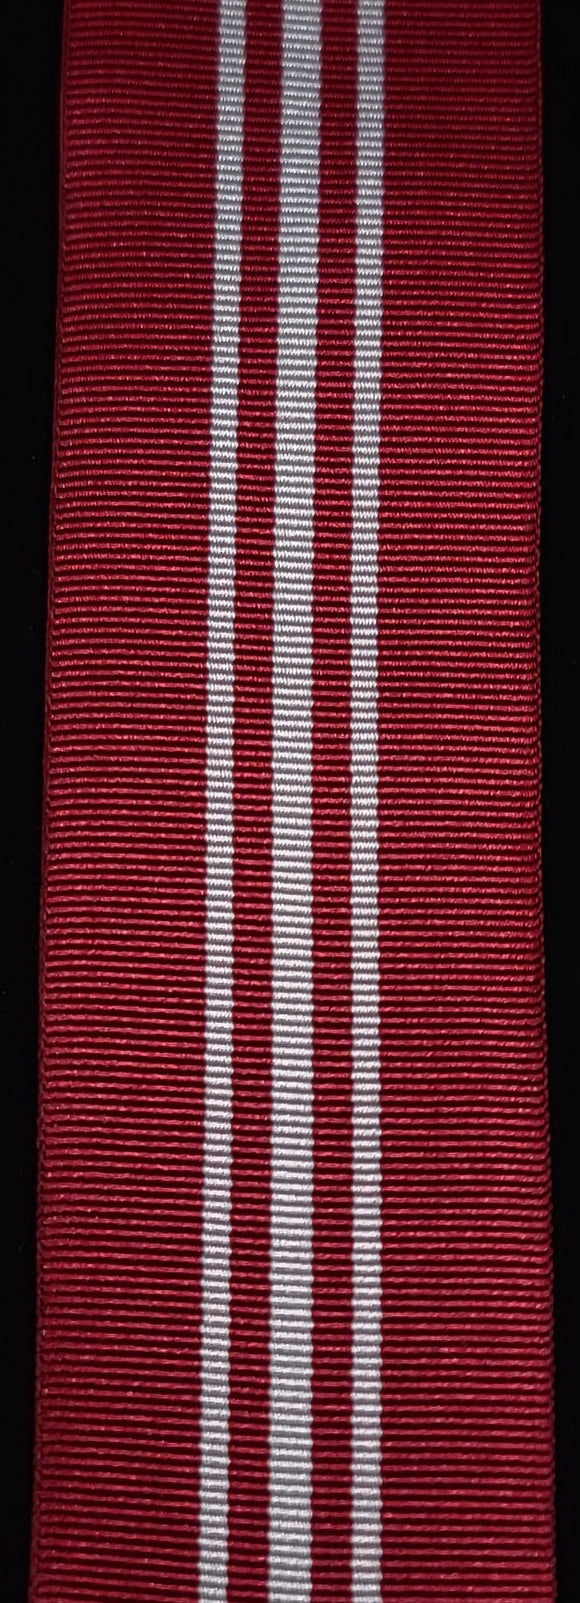 Ribbon, Legion Meritorious Service Medal, Ladies Auxiliary